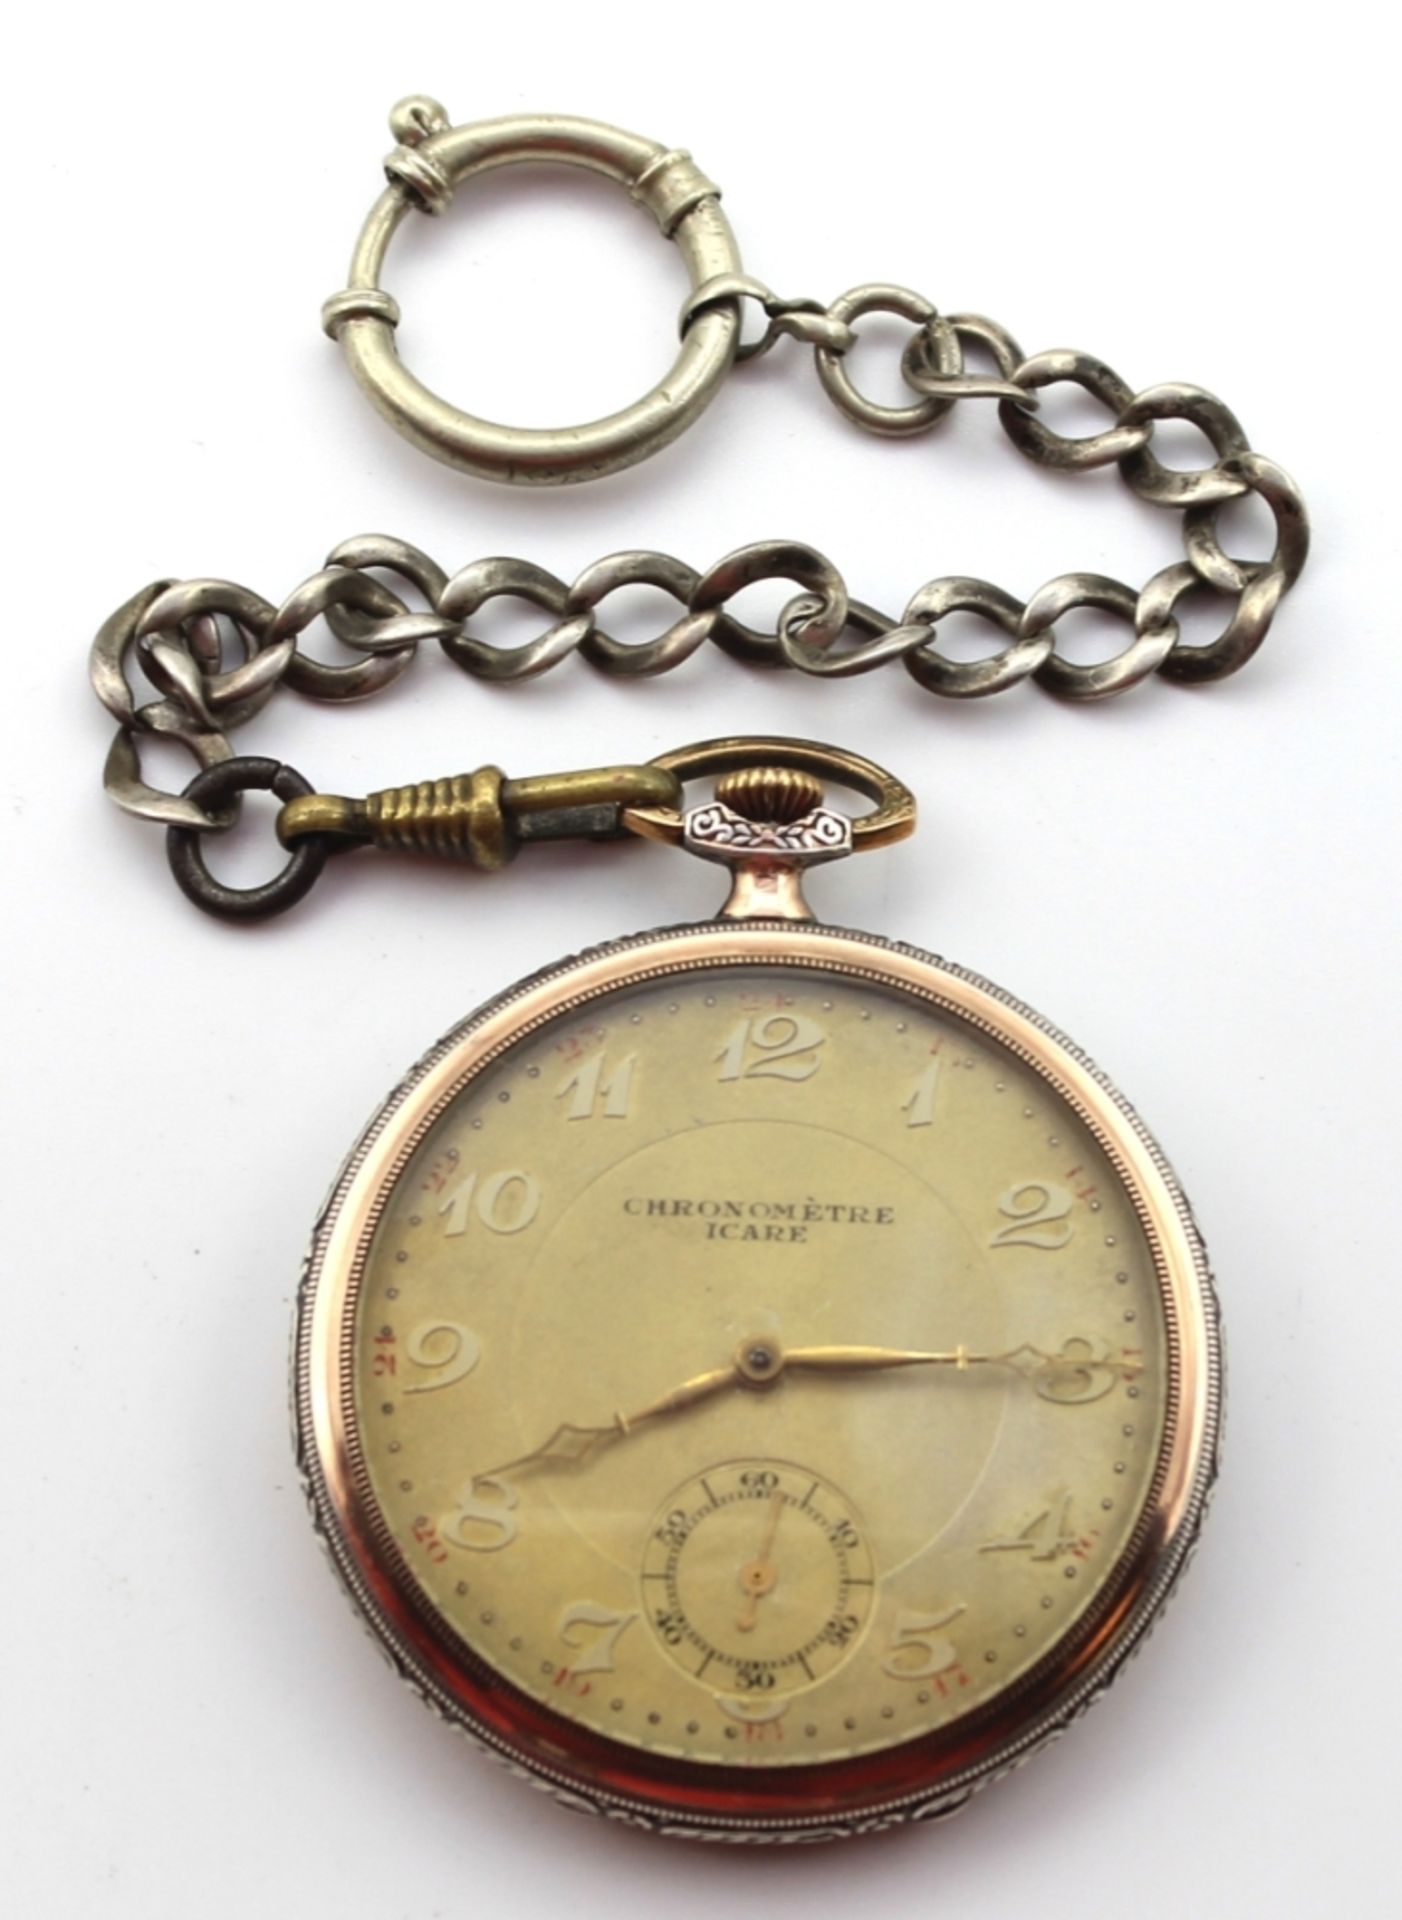 Flache offene Taschenuhr, Marke Chronometre Icare Silber gest. 800, Randvergoldung, goldfarbenes